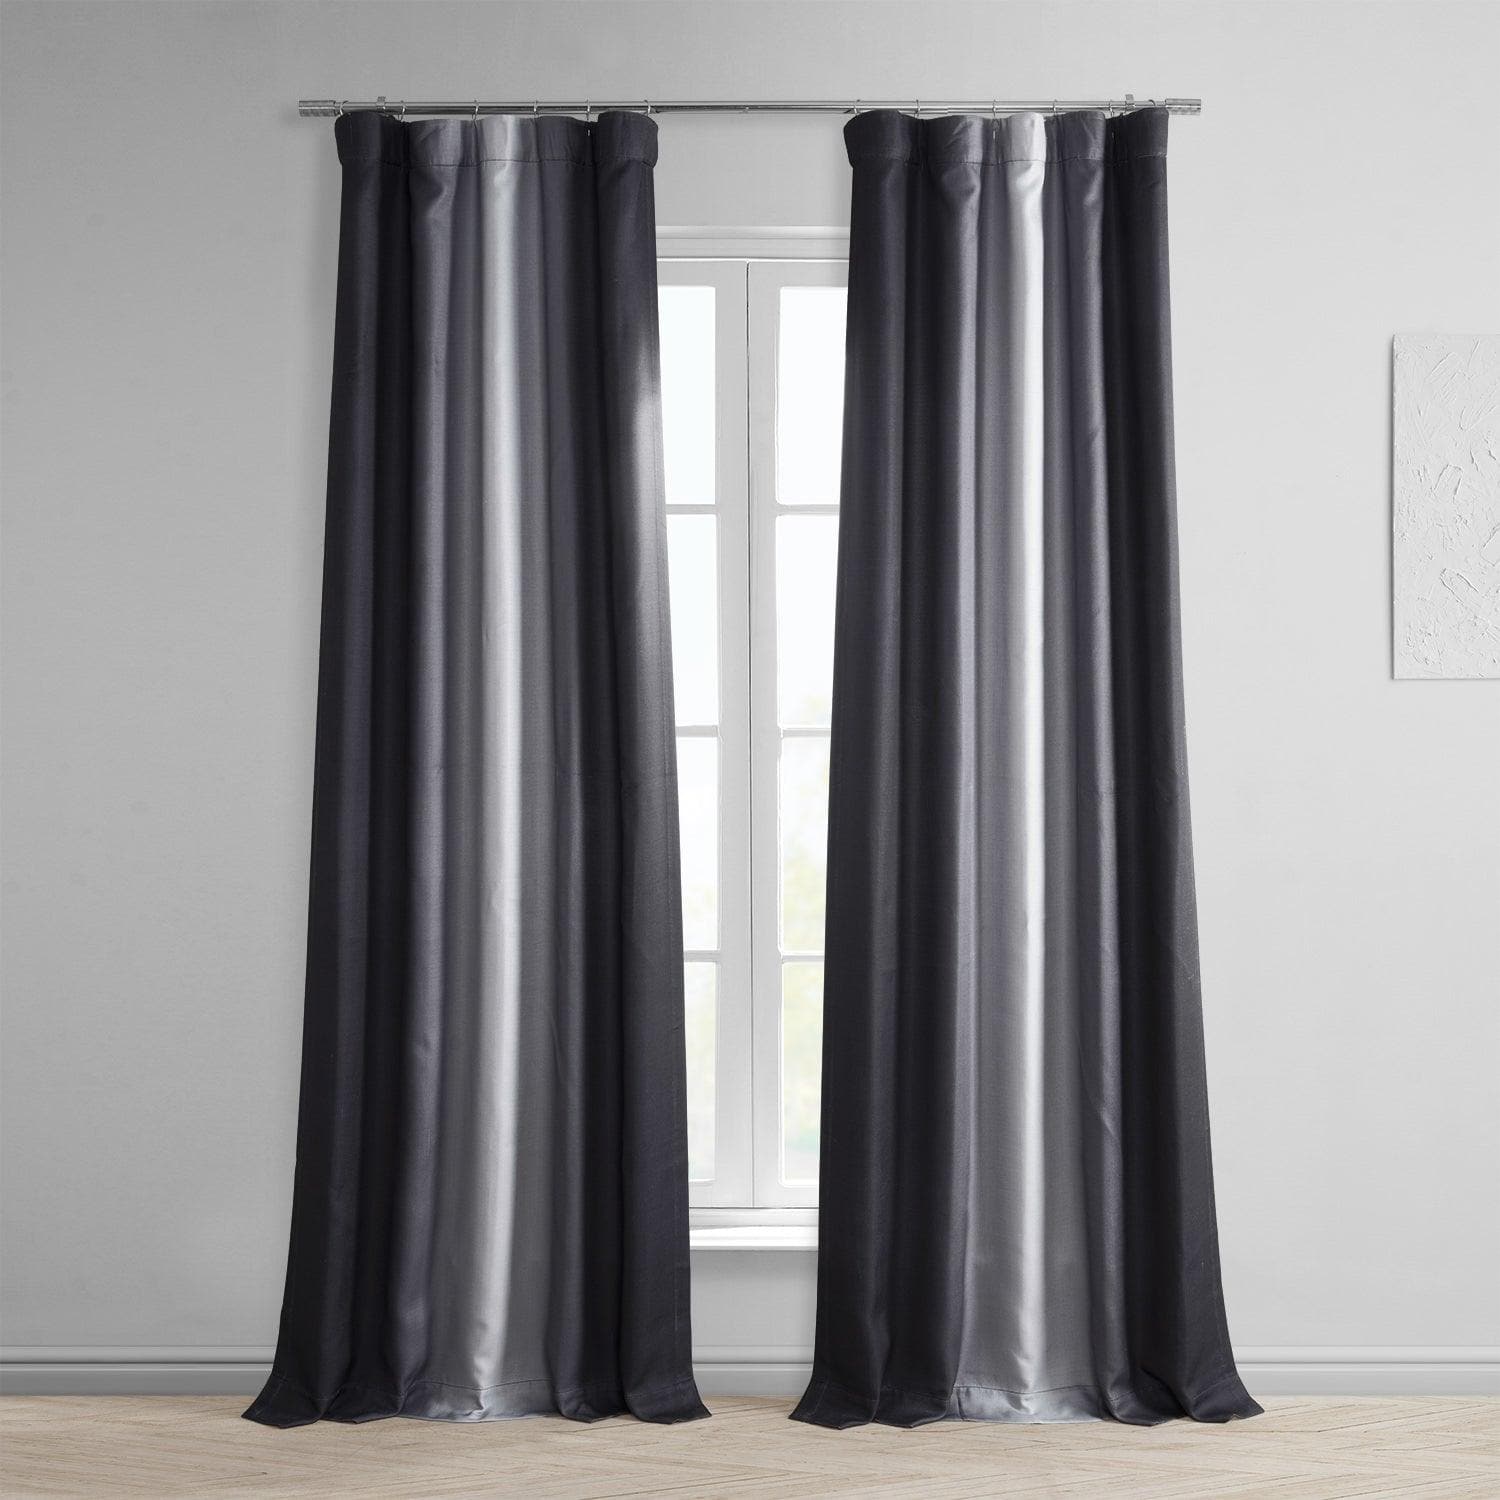 Parallel Grey Printed Faux Linen Room Darkening Curtain